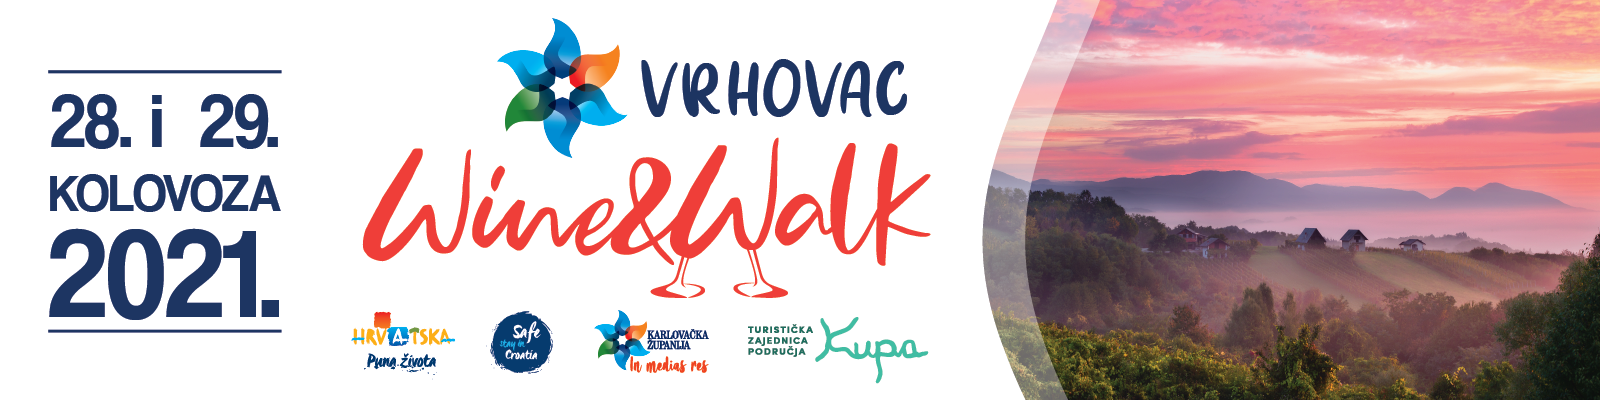 Vrhovac Wine and Walk